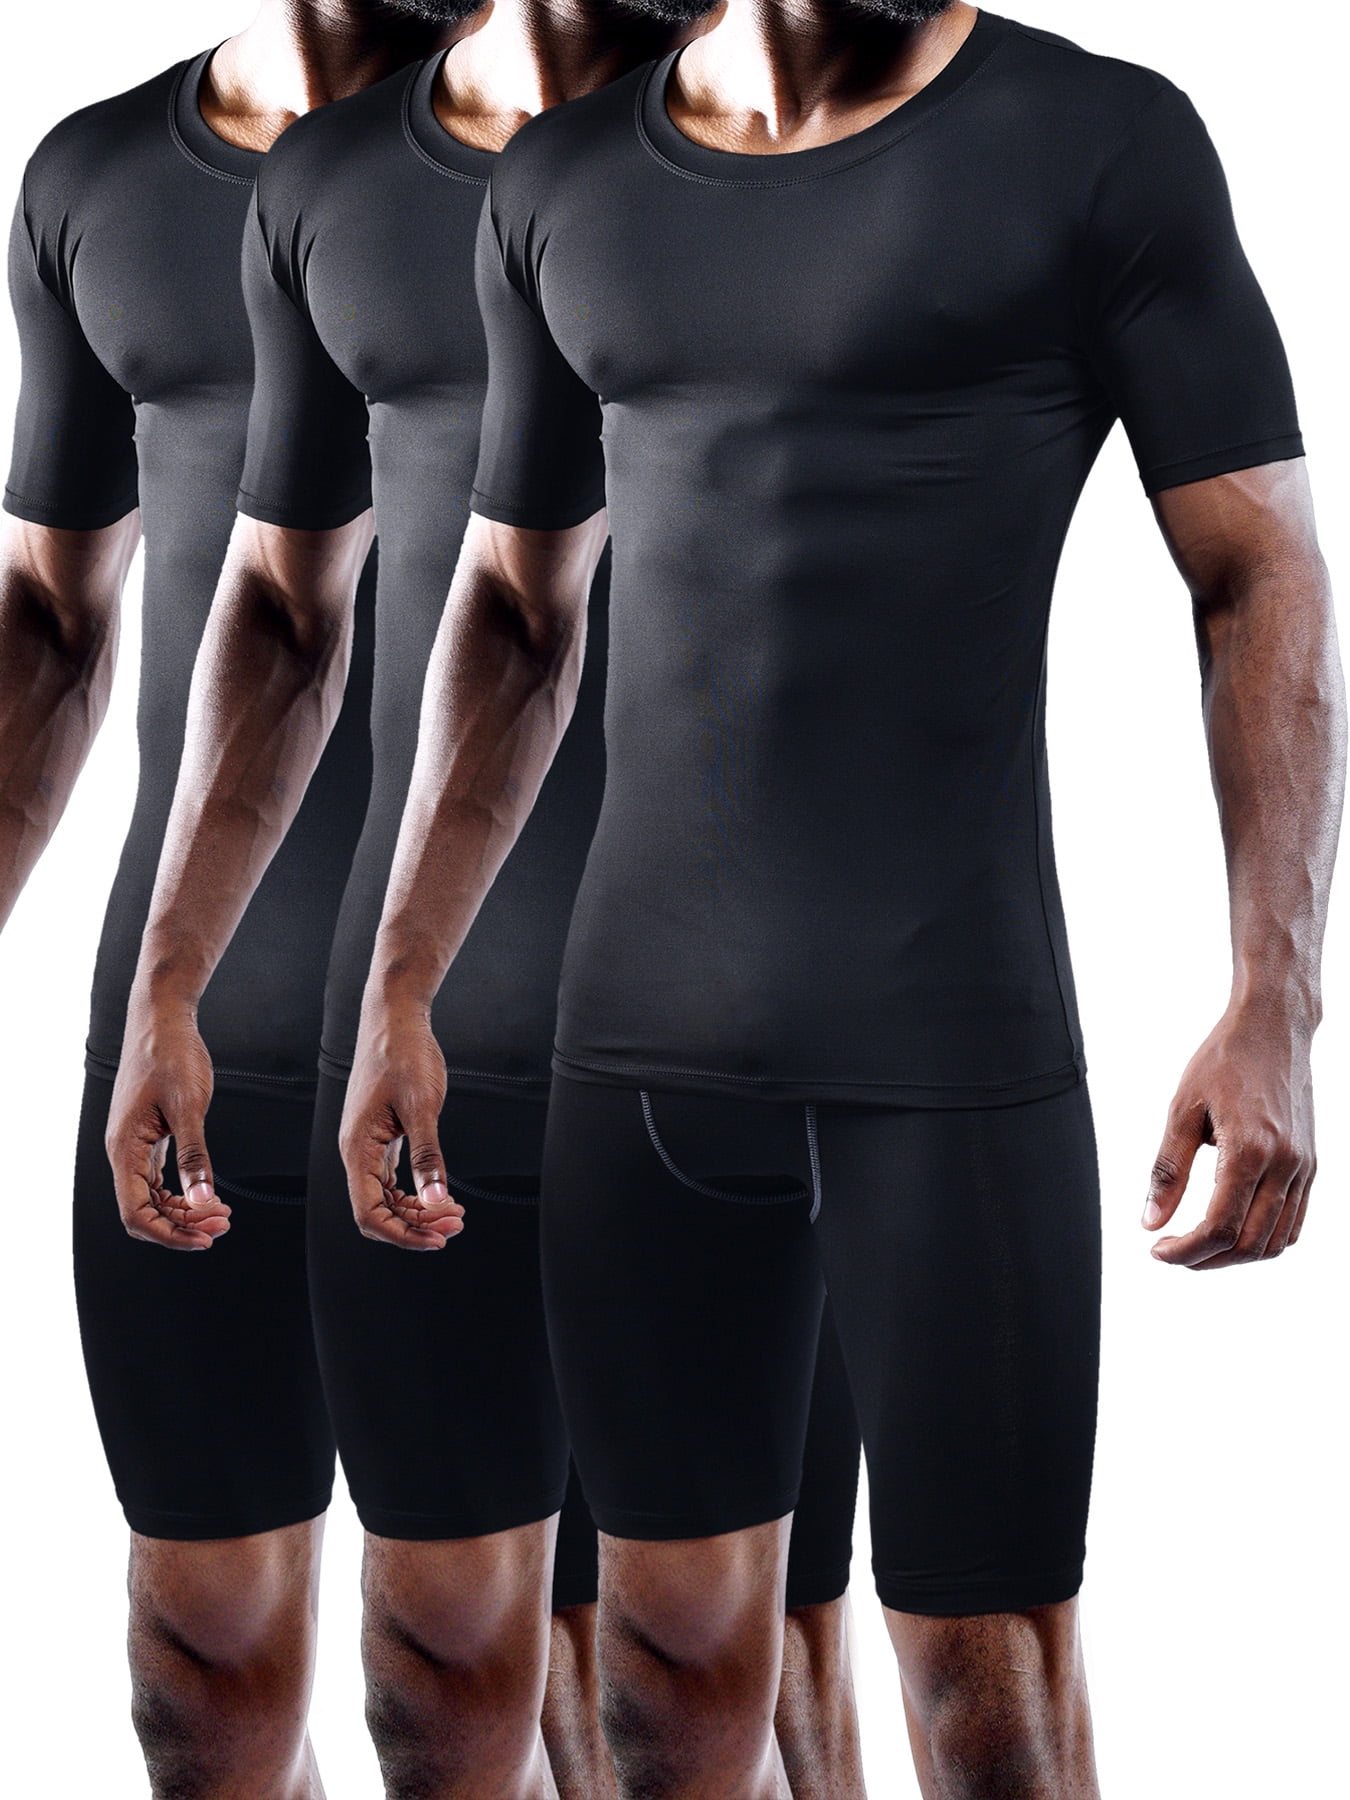 NELEUS Men's Athletic Compression Shirt Base Layer Tight Tops Short ...